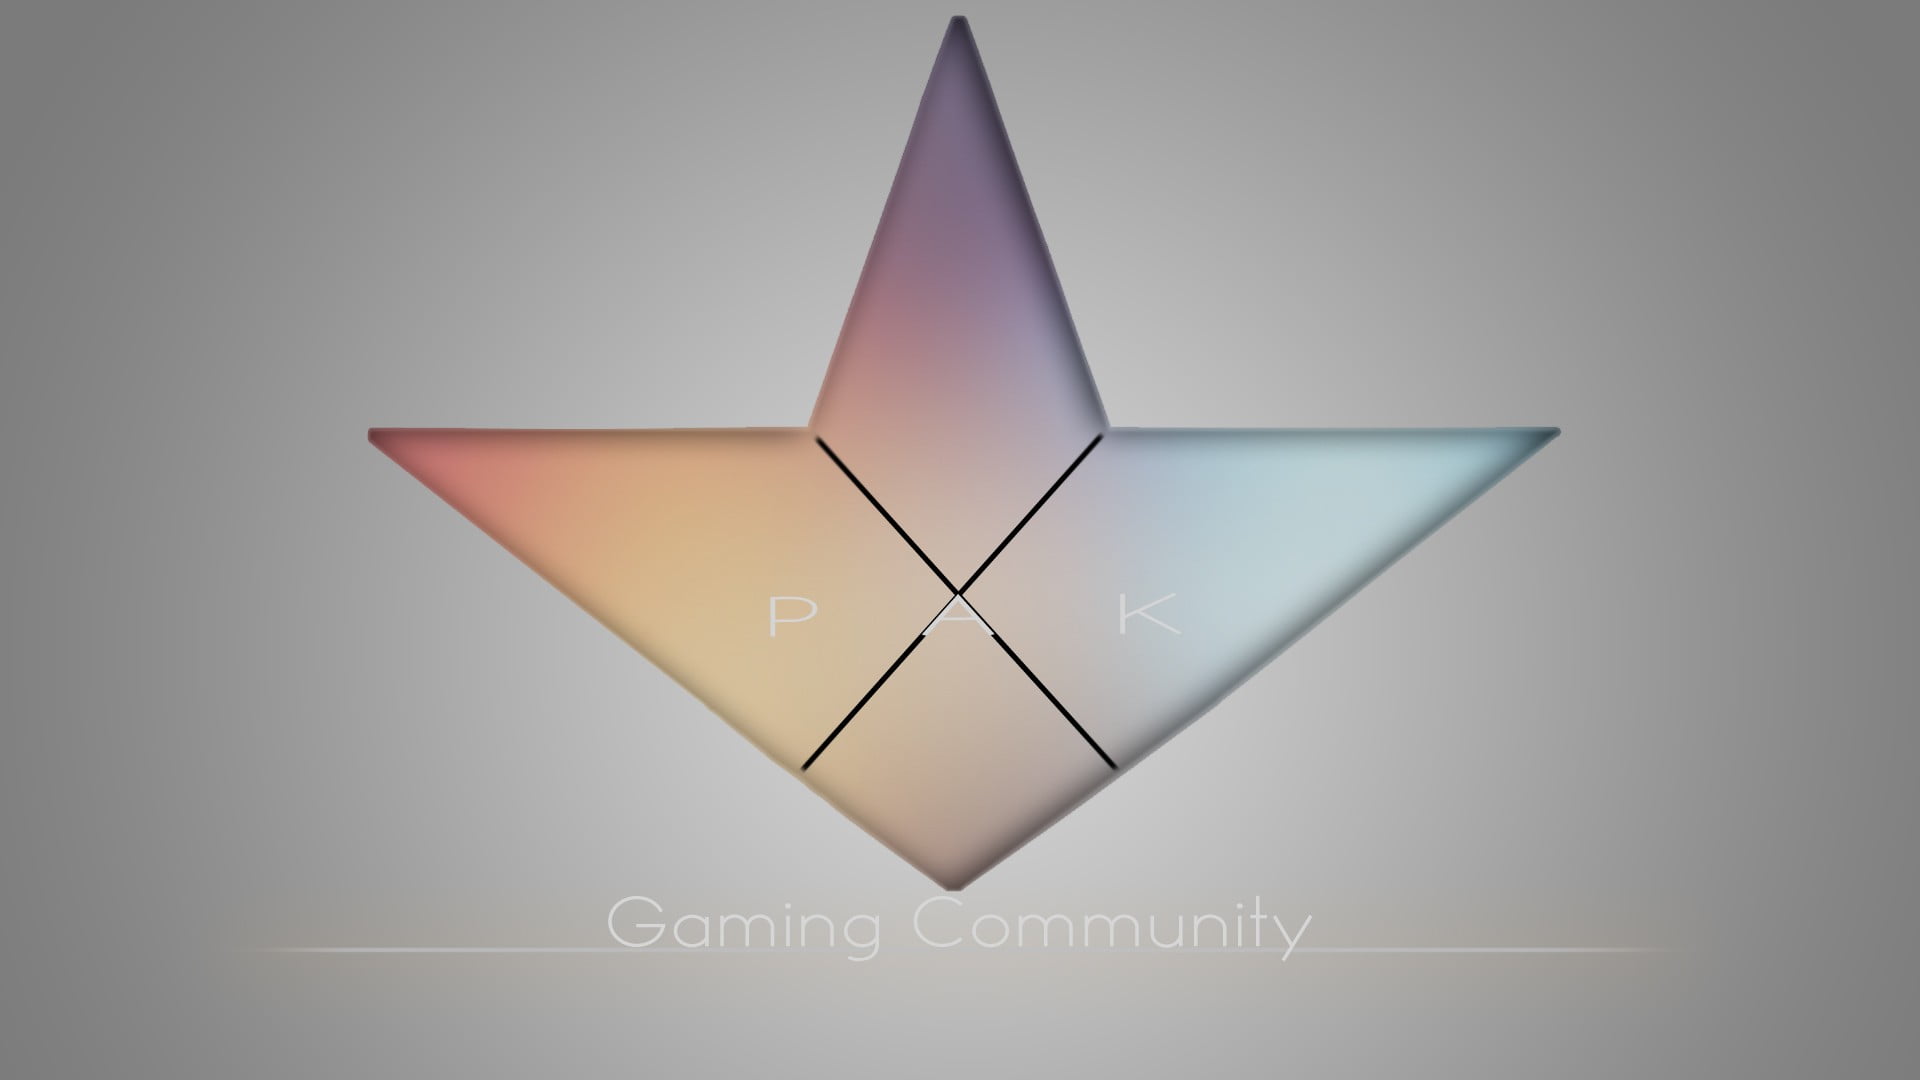 Gaming Community logo, logo